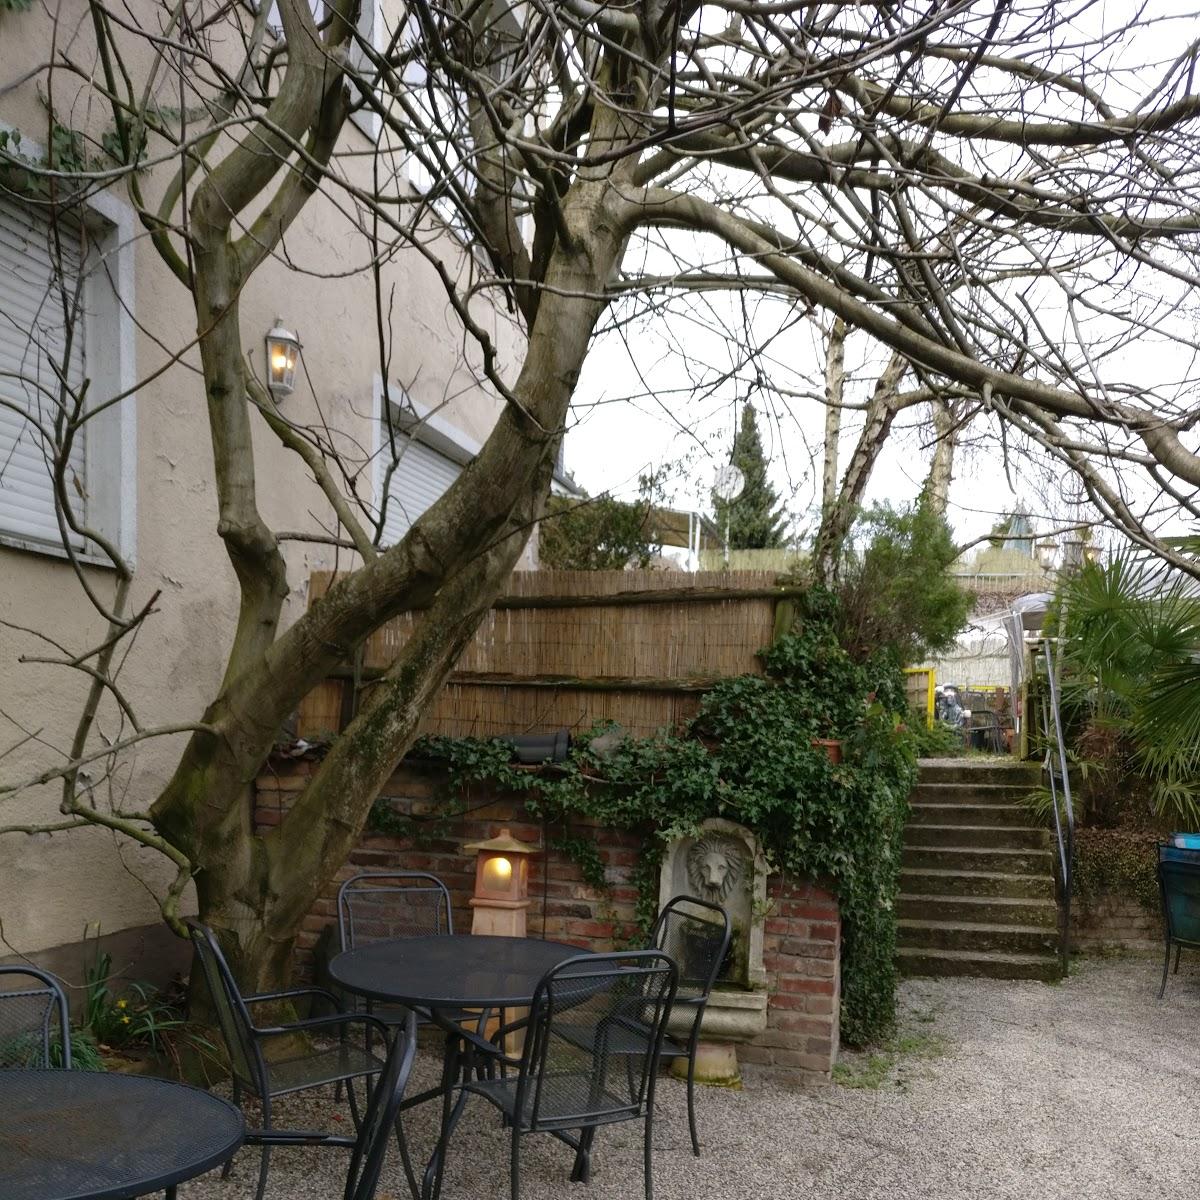 Restaurant "Bodega Dali" in Remagen